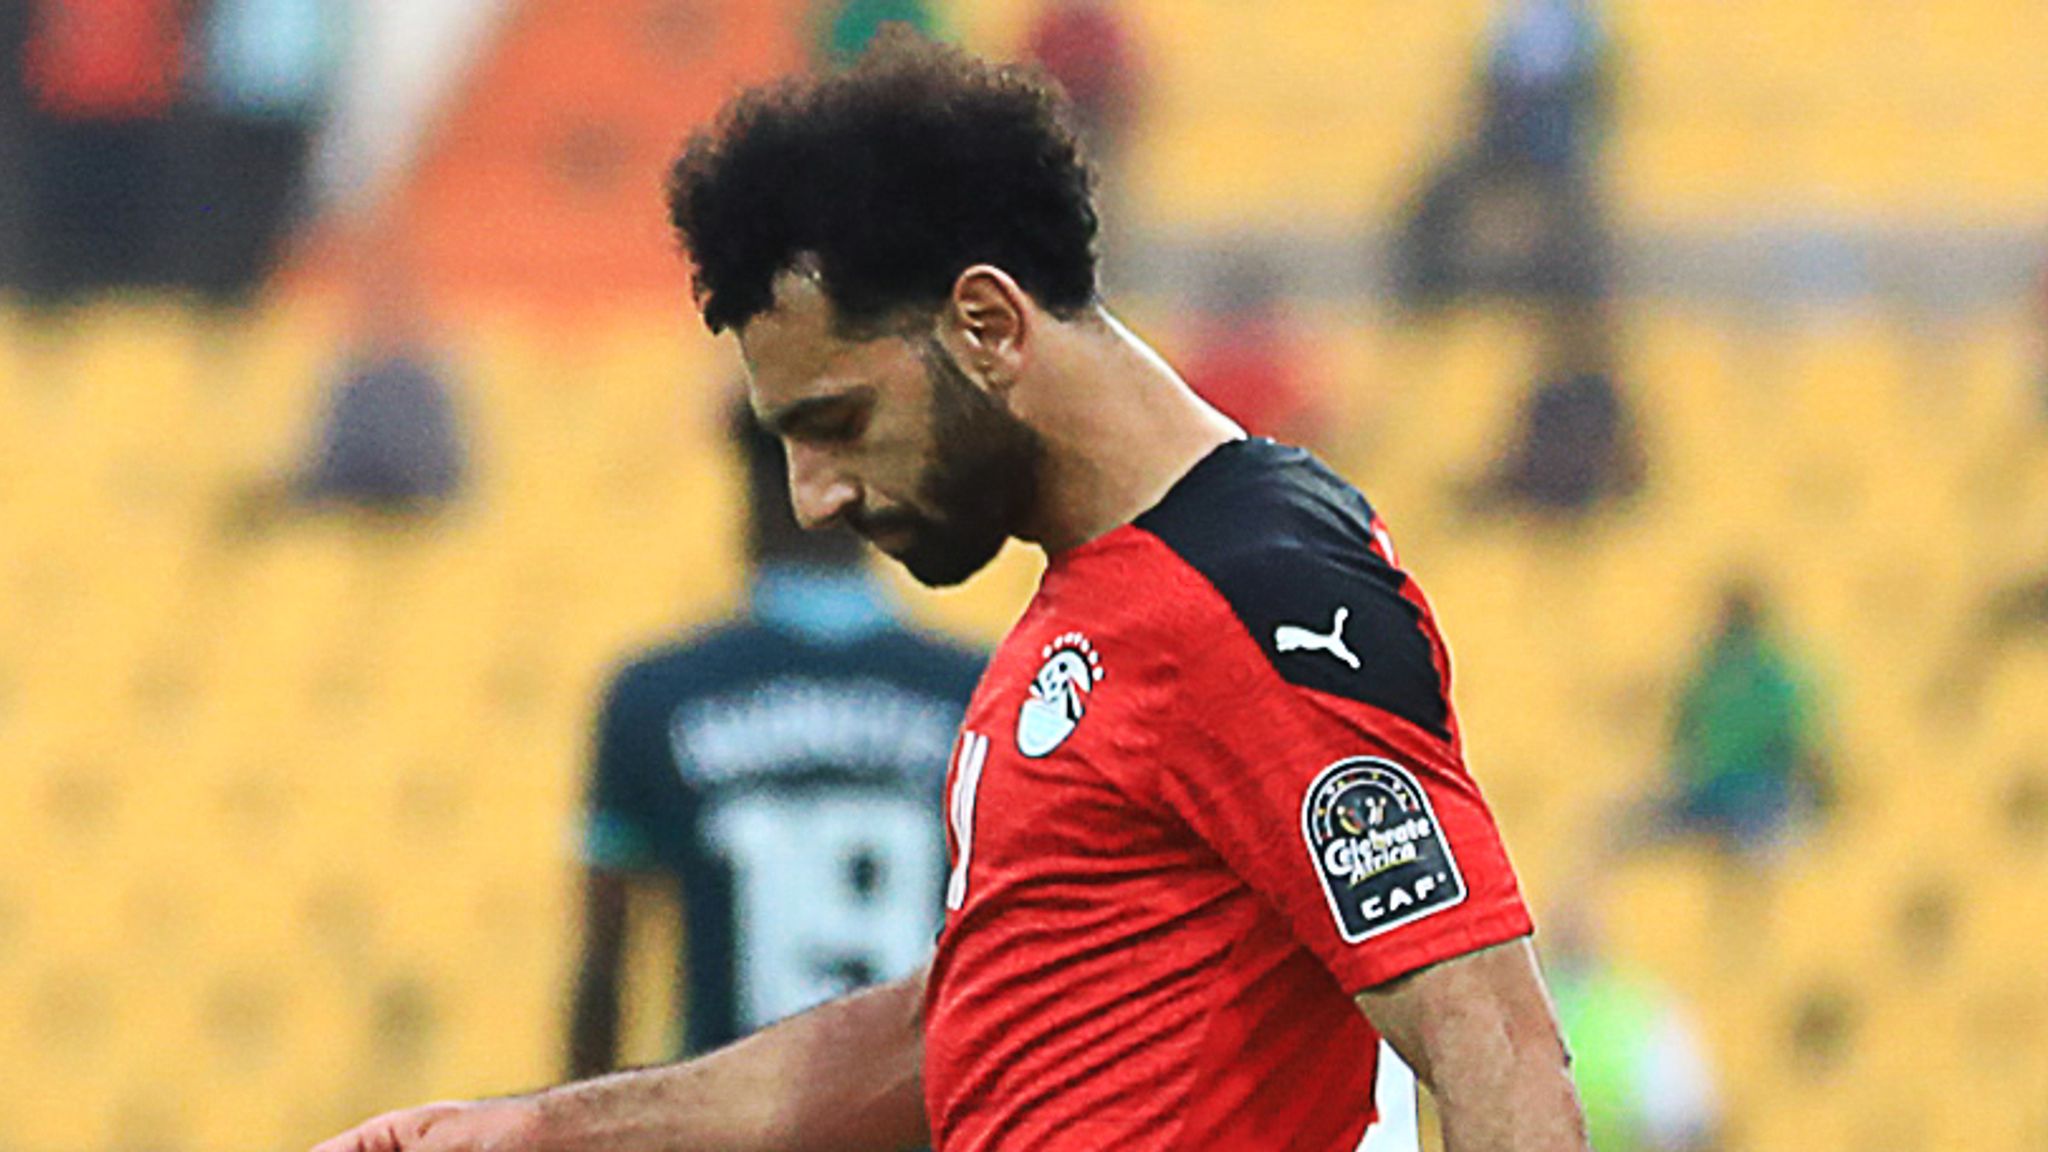 Nigeria 1-0 Egypt: Kelechi Iheanacho scores only goal as Mohamed Salah fails to inspire Pharaohs | Football News | Sky Sports